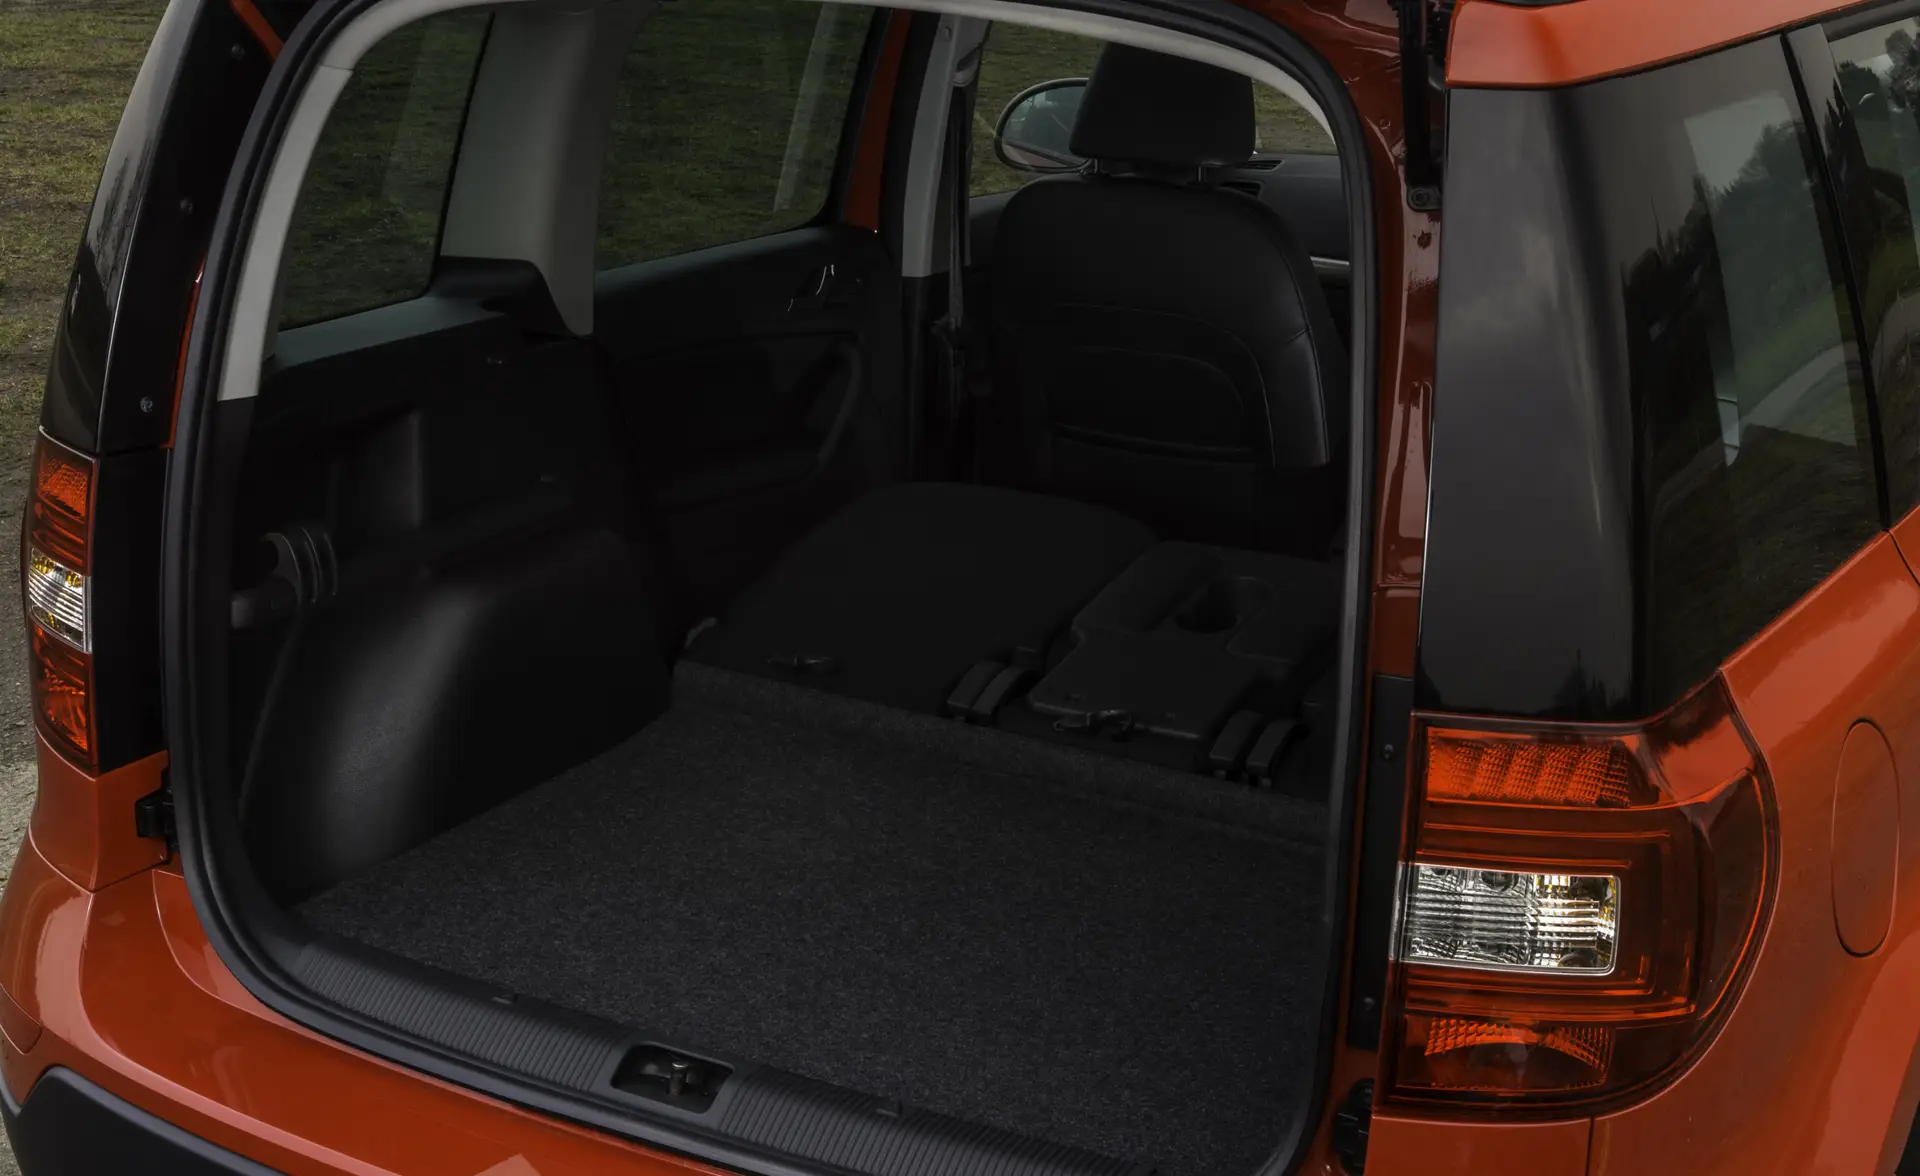 Used Skoda Yeti Hatchback (2009 - 2017) Review